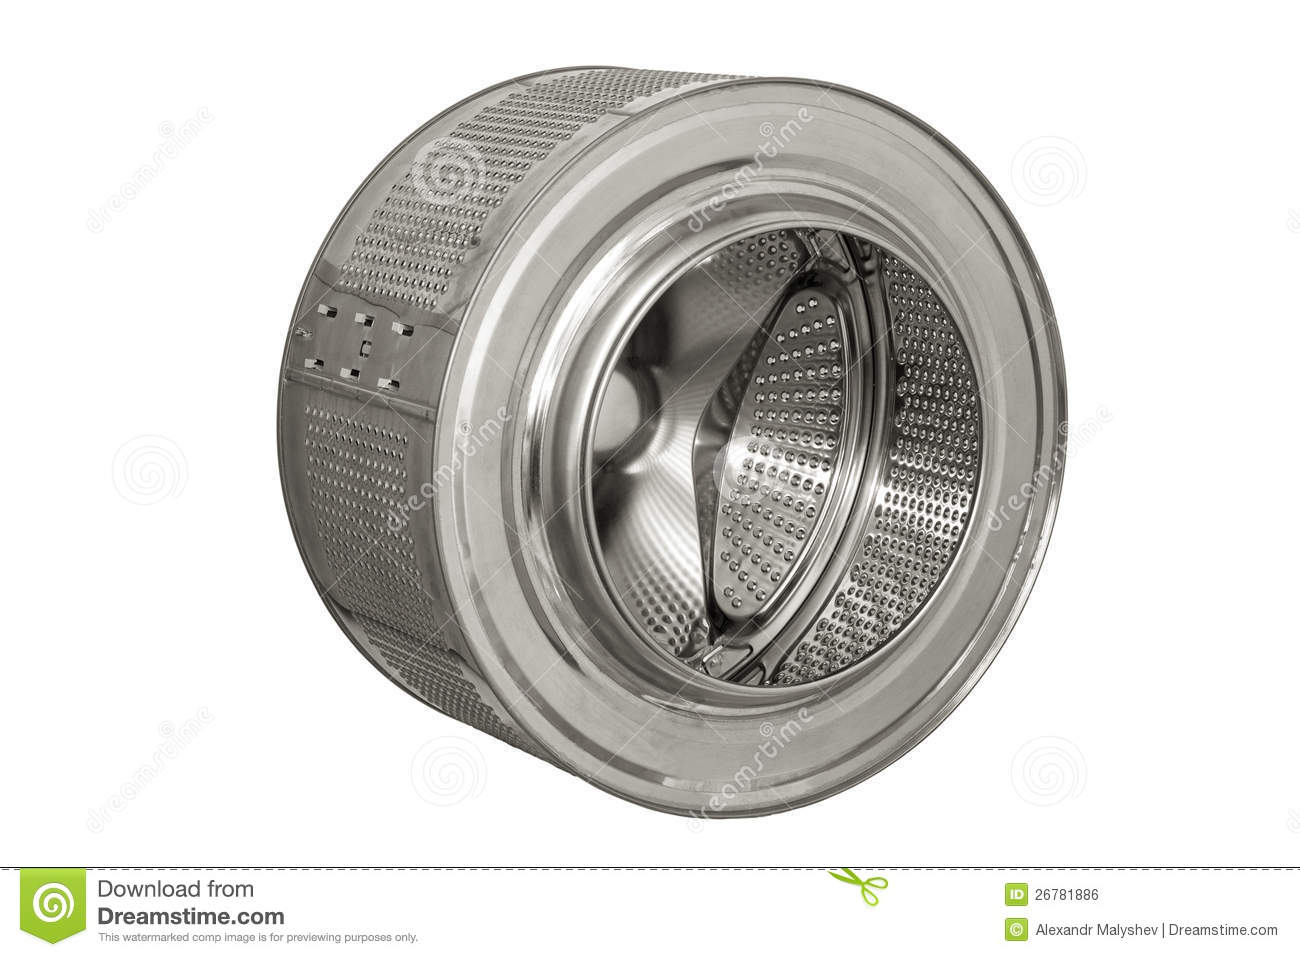 Steel Drum Of A Washing Machine  Royalty Free Stock Image   Image